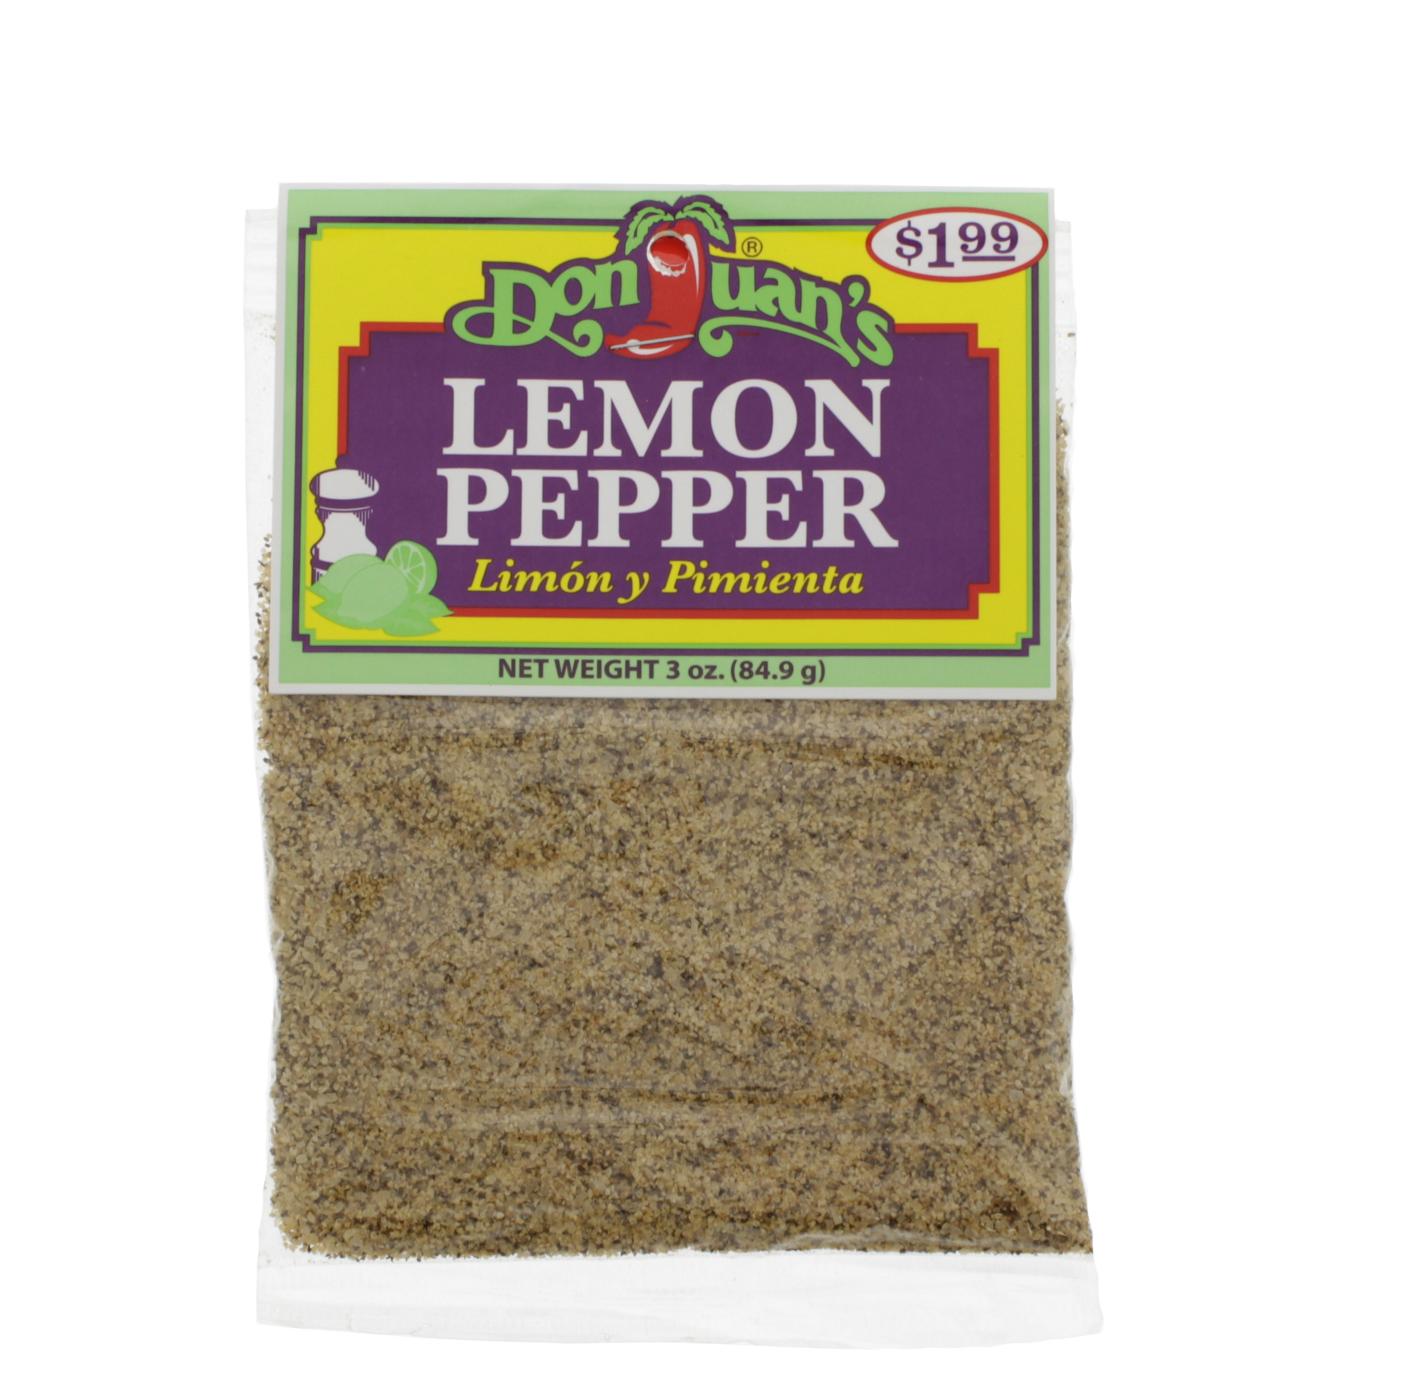 Don Juan's Orange Pepper Seasoning - Shop Spice Mixes at H-E-B